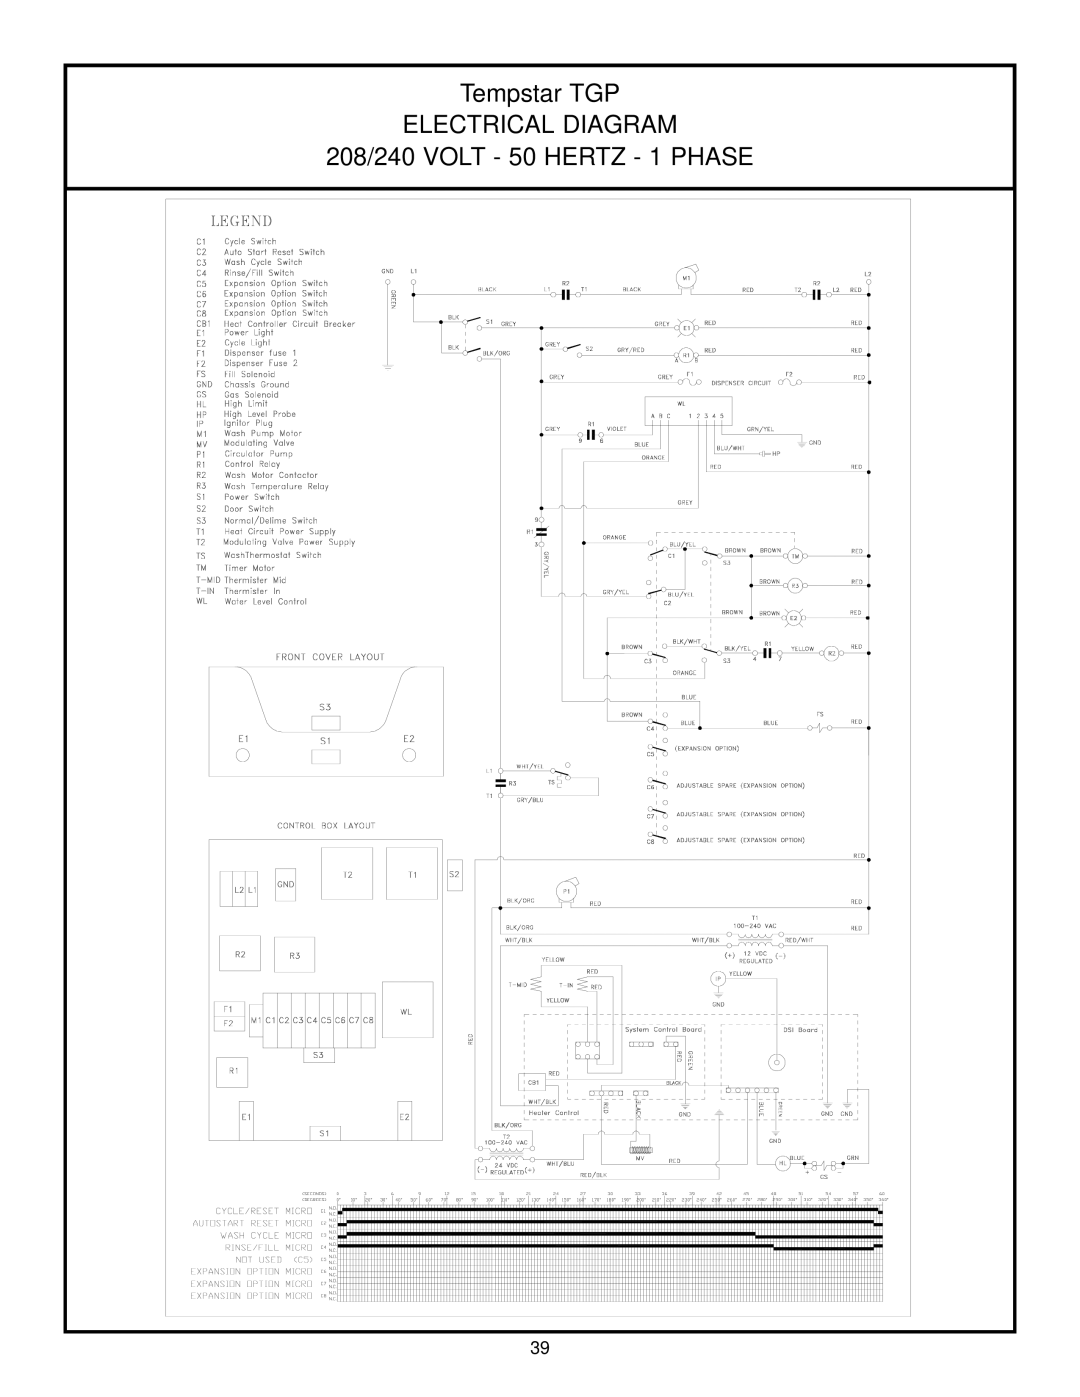 Jackson Tempstar TGP technical manual Electrical Diagram, 208/240 VOLT - 50 HERTZ - 1 PHASE 